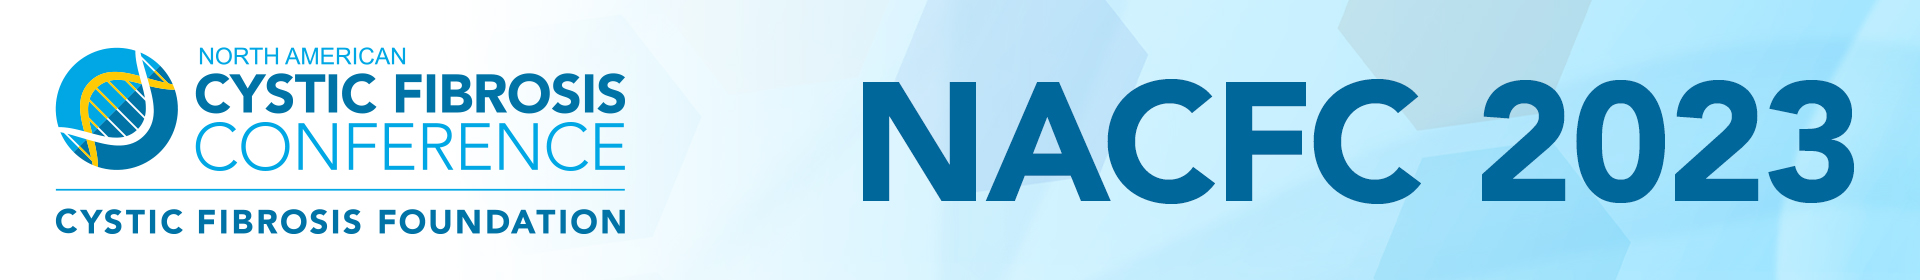 NACFC 2023 Event Banner